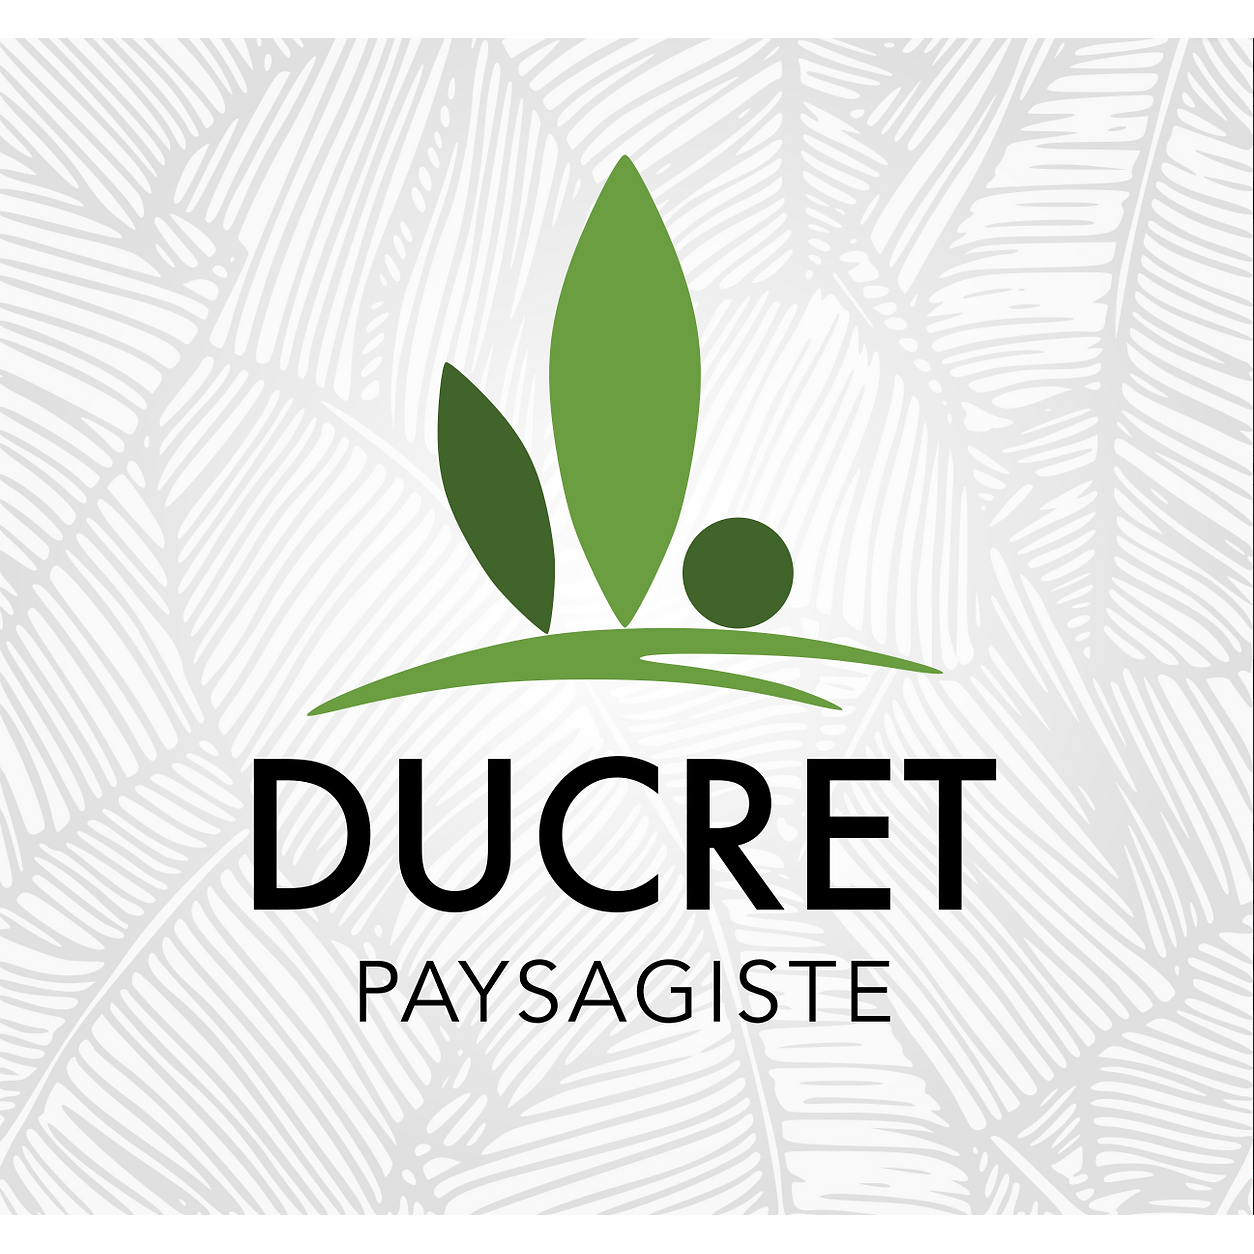 Ducret paysagiste Logo